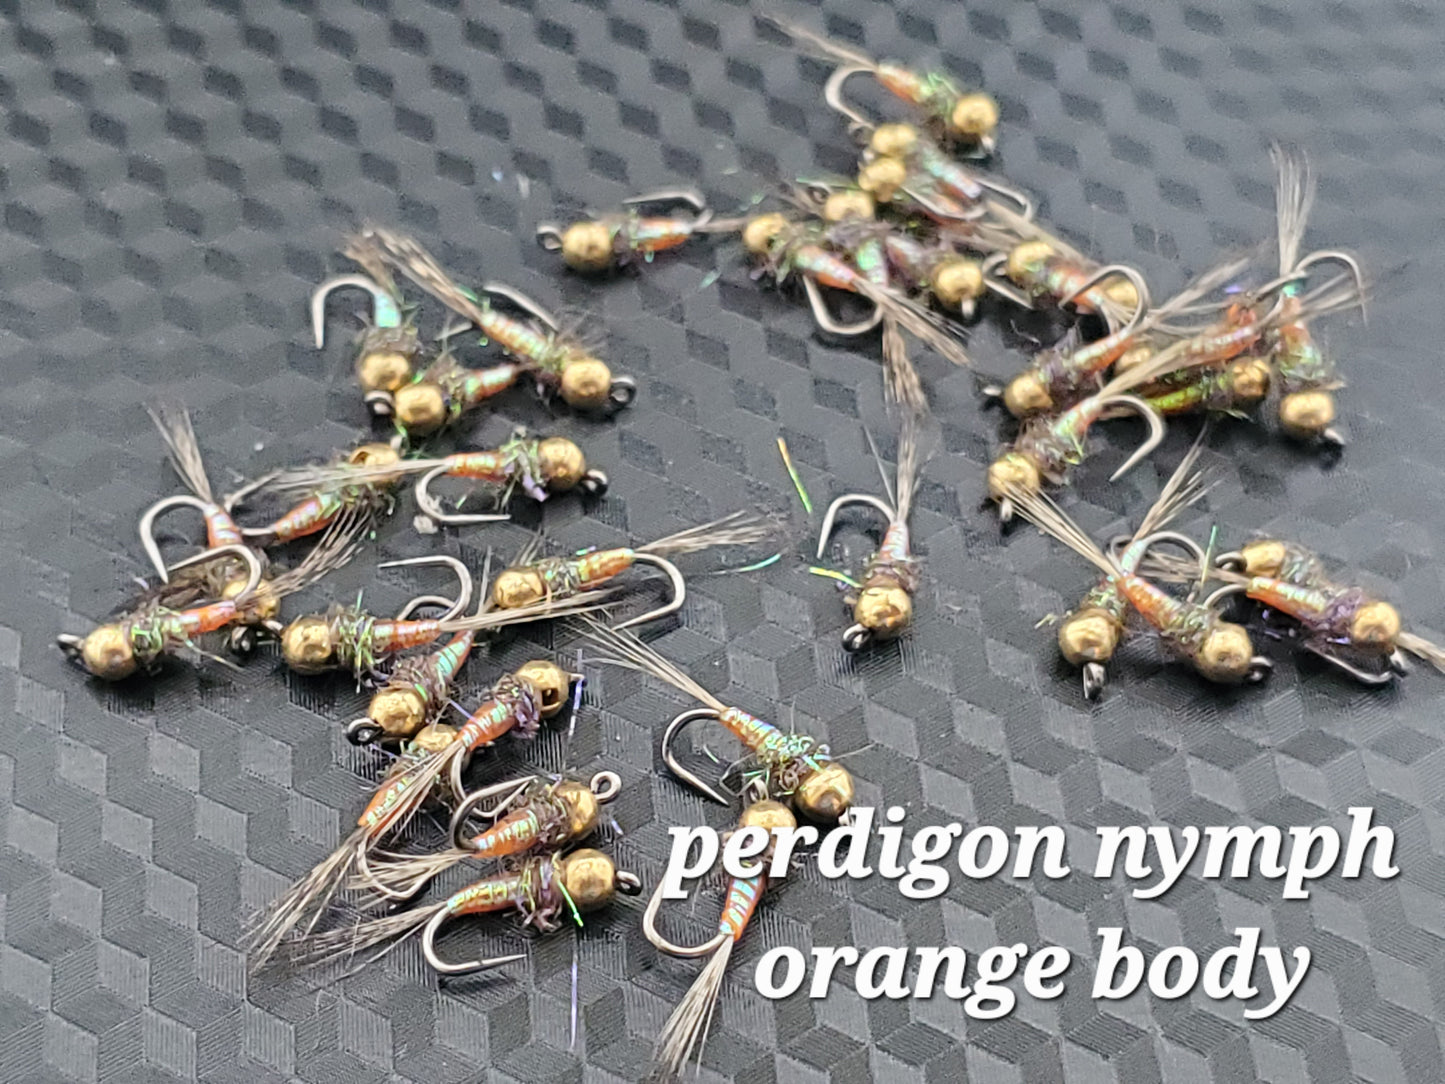 Tungsten Bead Perdigon Nymph, Tungsten Perdigon Nymph, Perdigon Nymph Orange Body